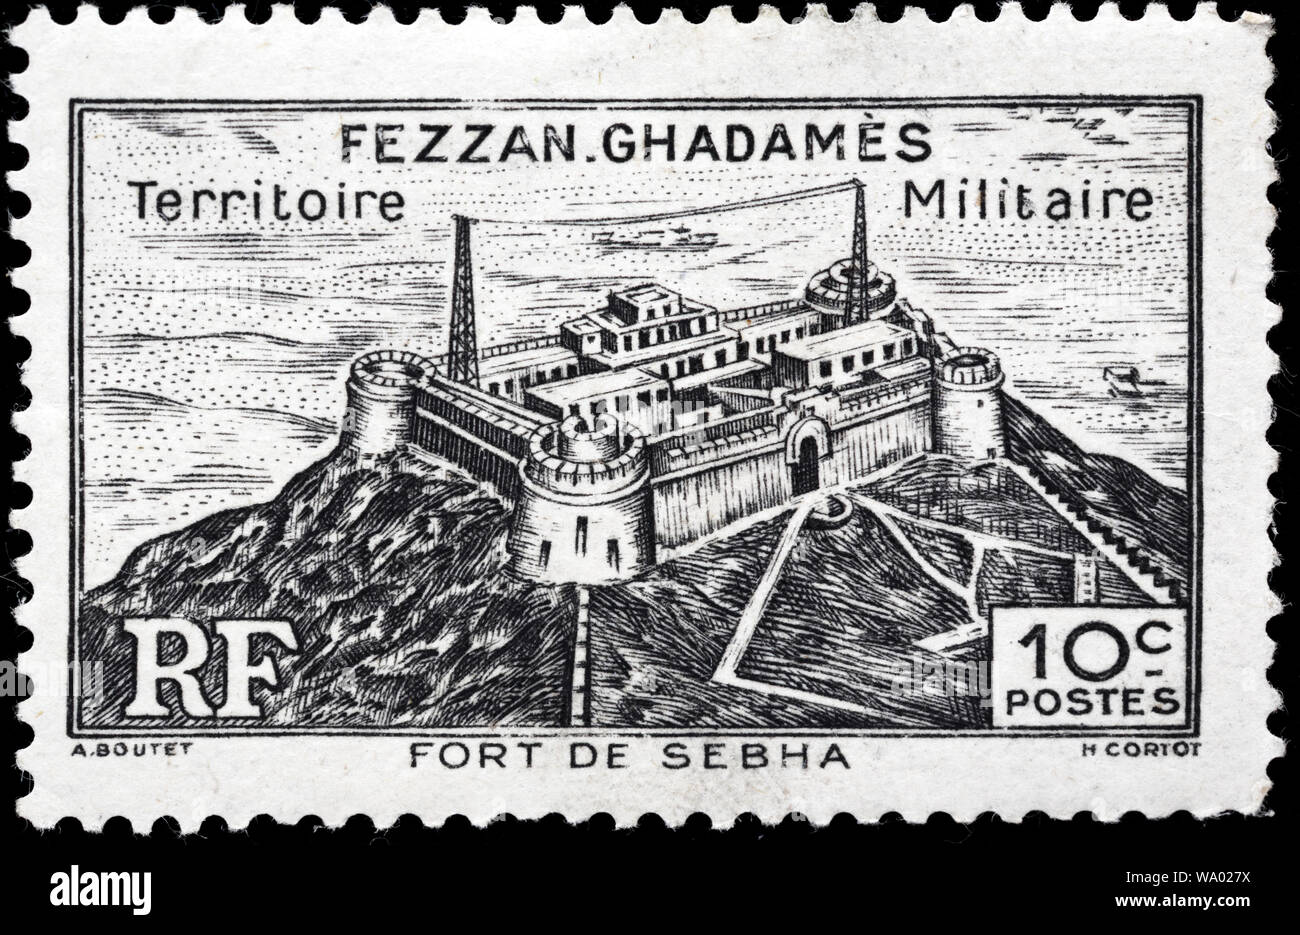 Fort Sabha, postage stamp, Fezzan and Ghadames, 1946 Stock Photo